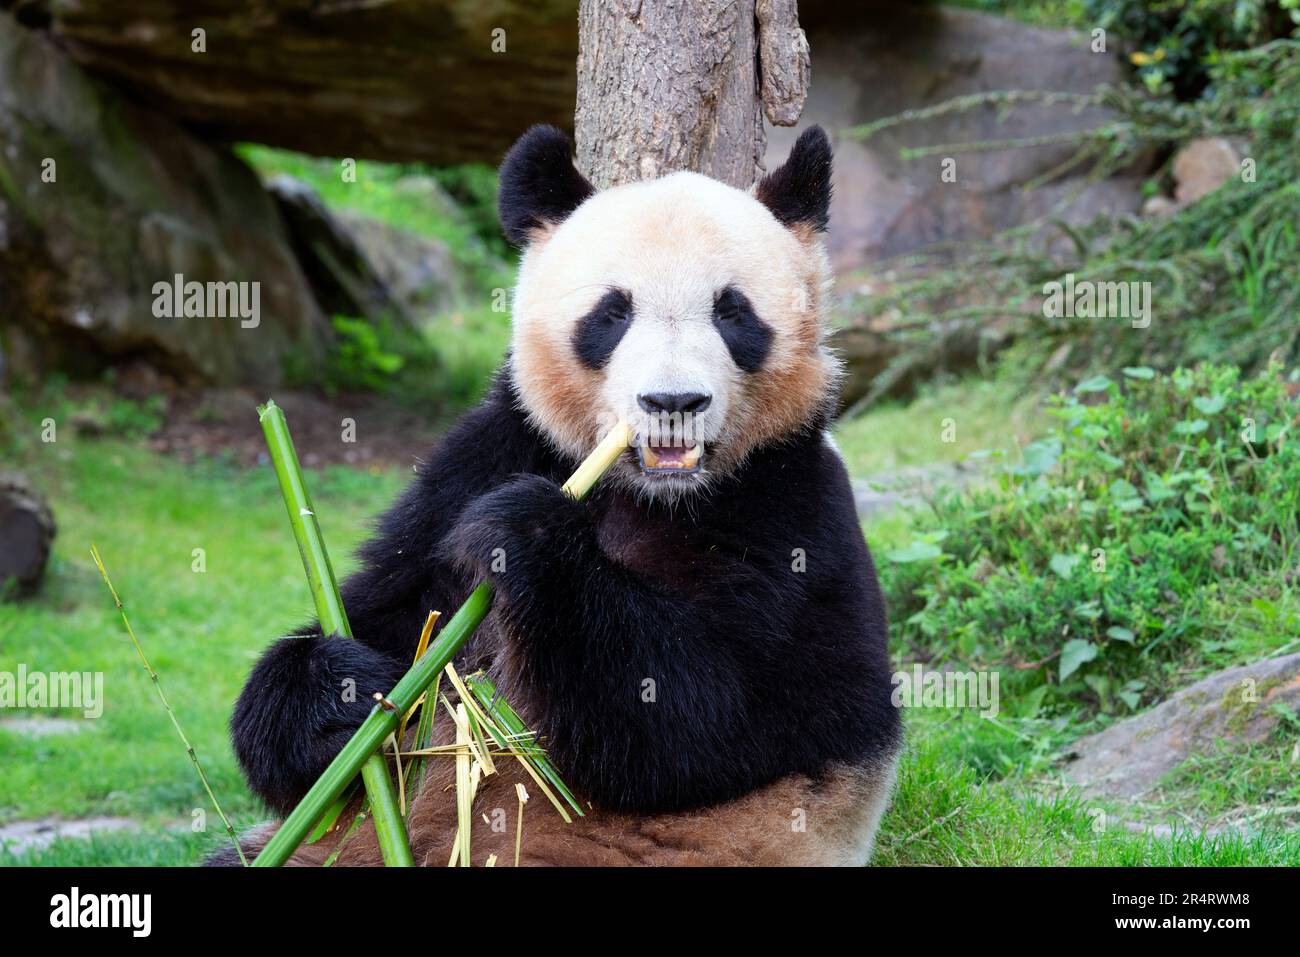 Panda isst Bambus in einem Zoo, Frankreich Stockfoto